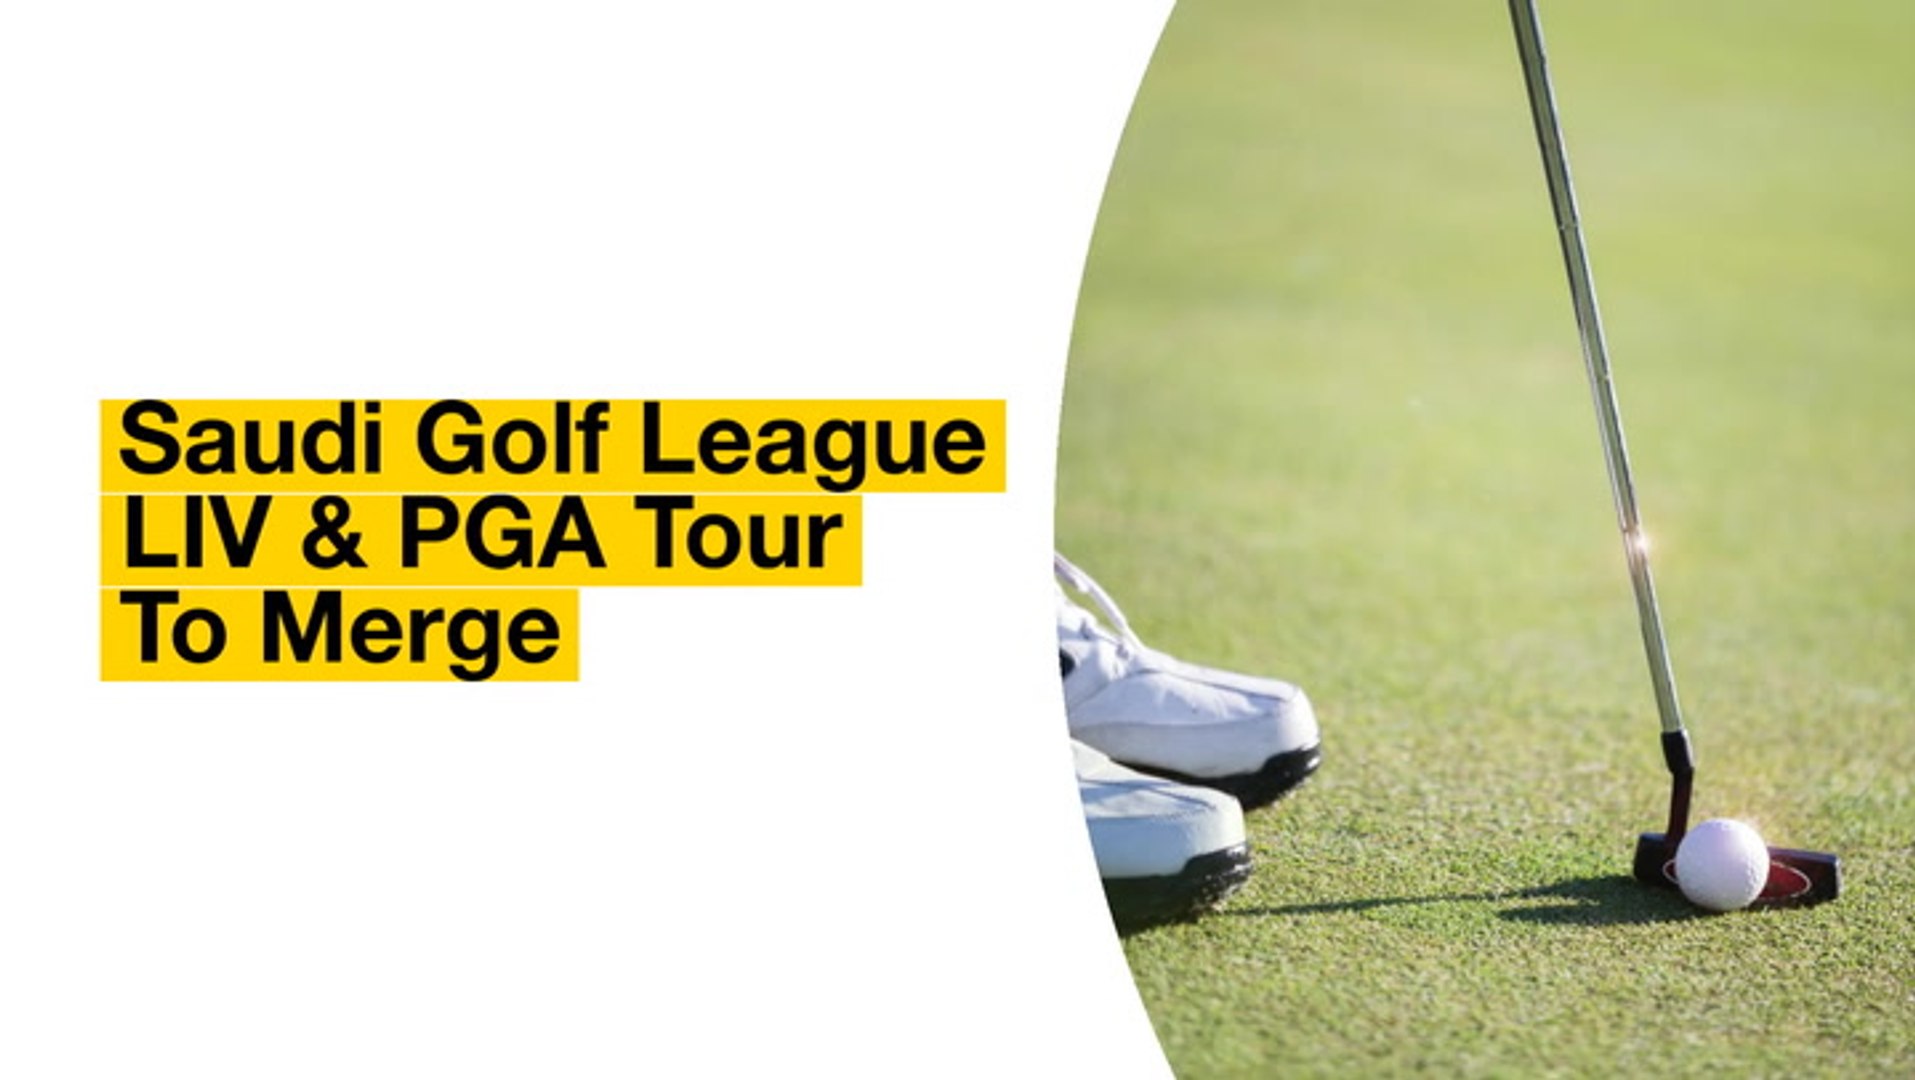 Saudi Golf League LIV and PGA Tour To Merge